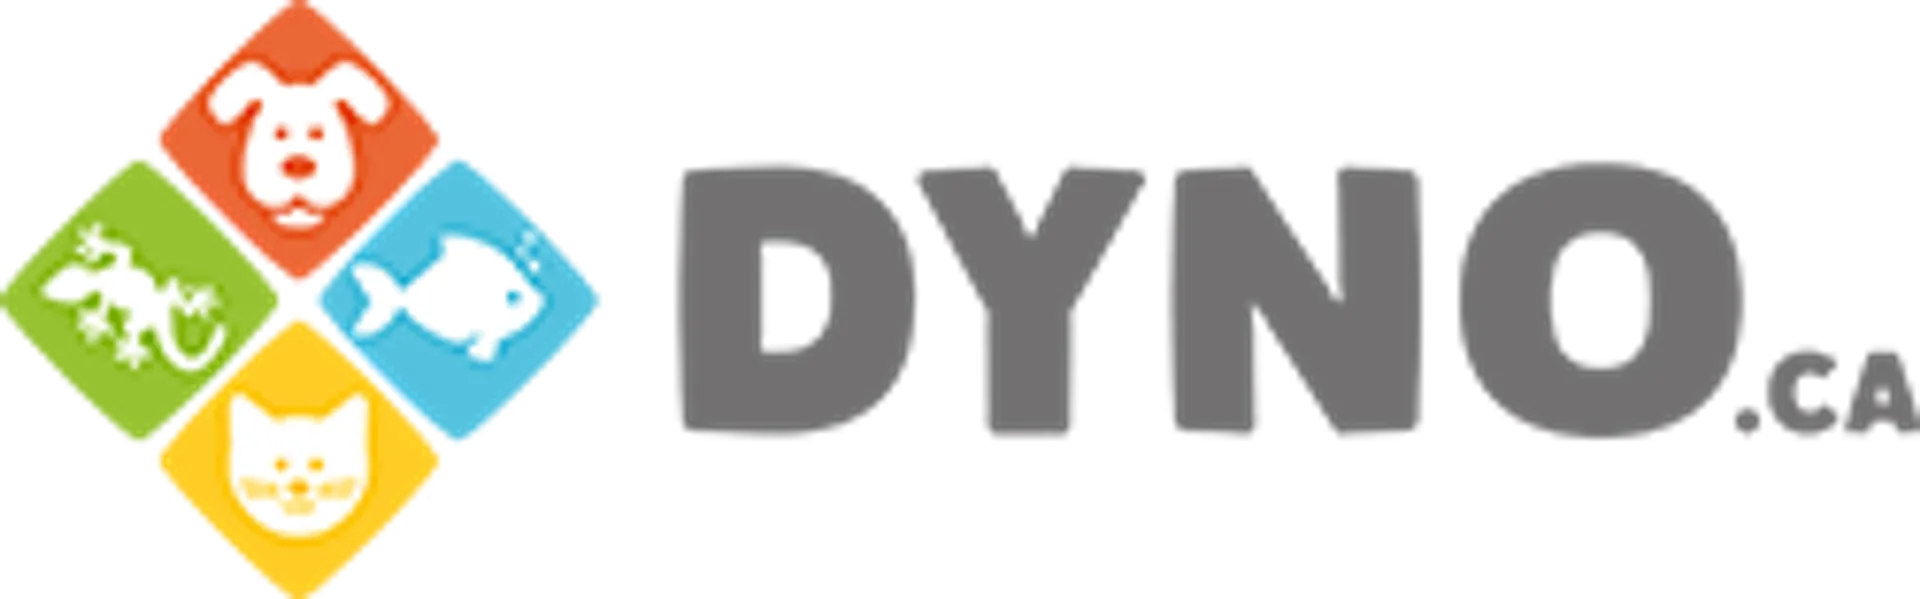 DYNO logo de circulaire